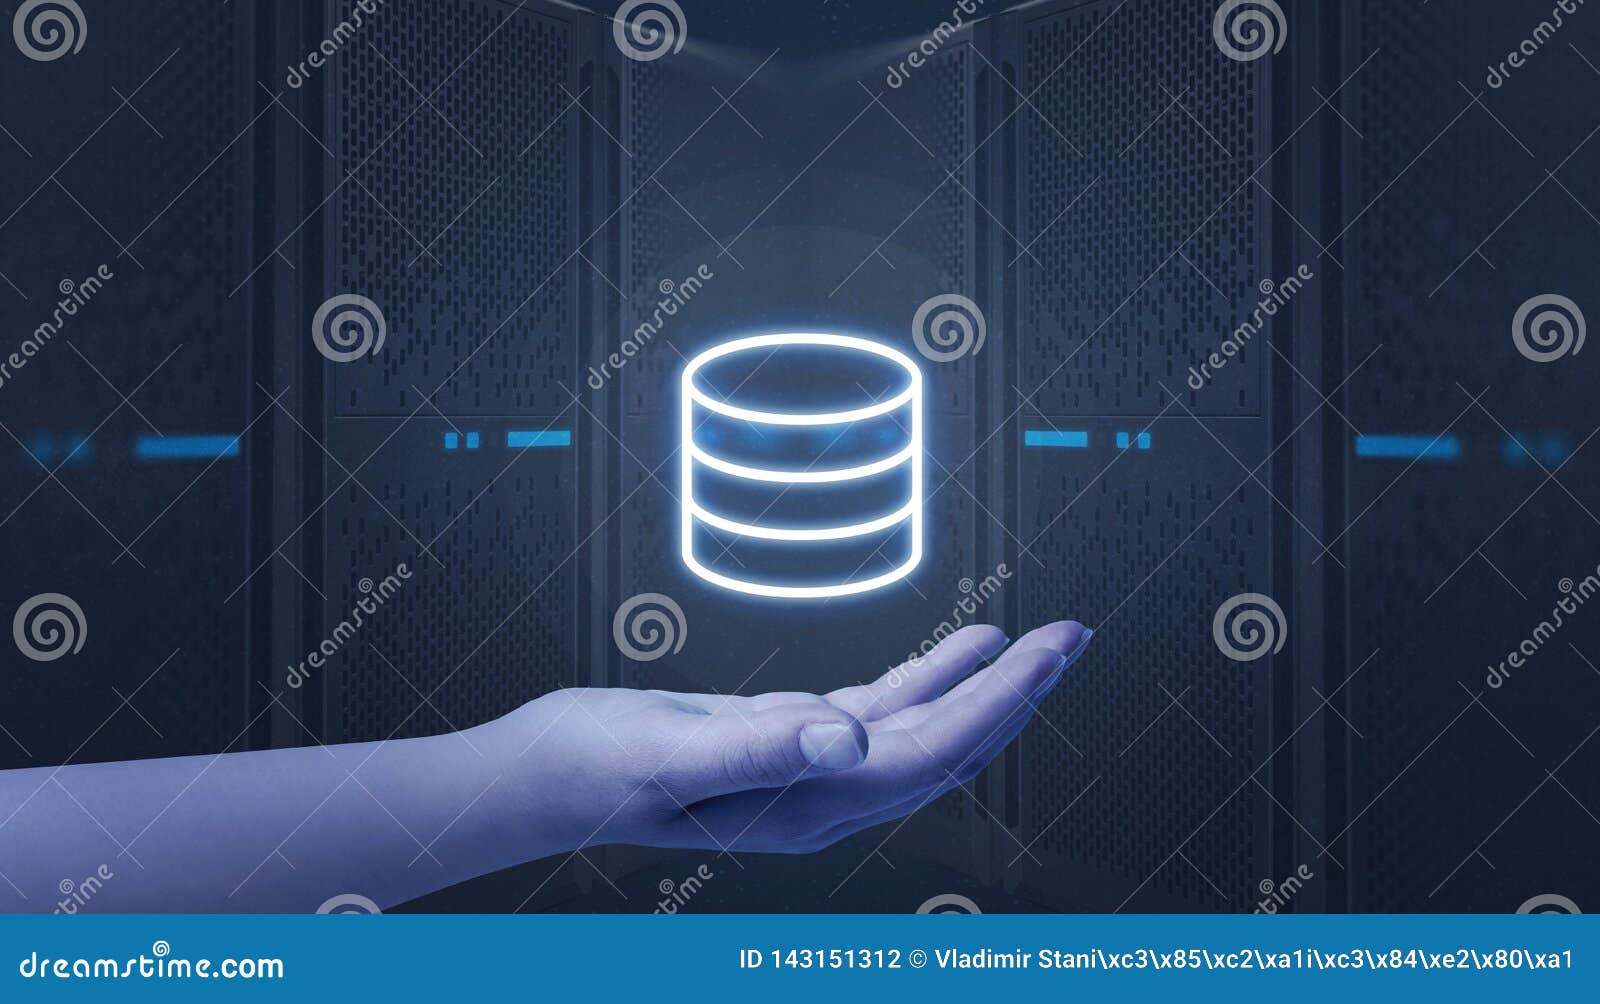 hand holding server, data center icon. web hosting servers in background